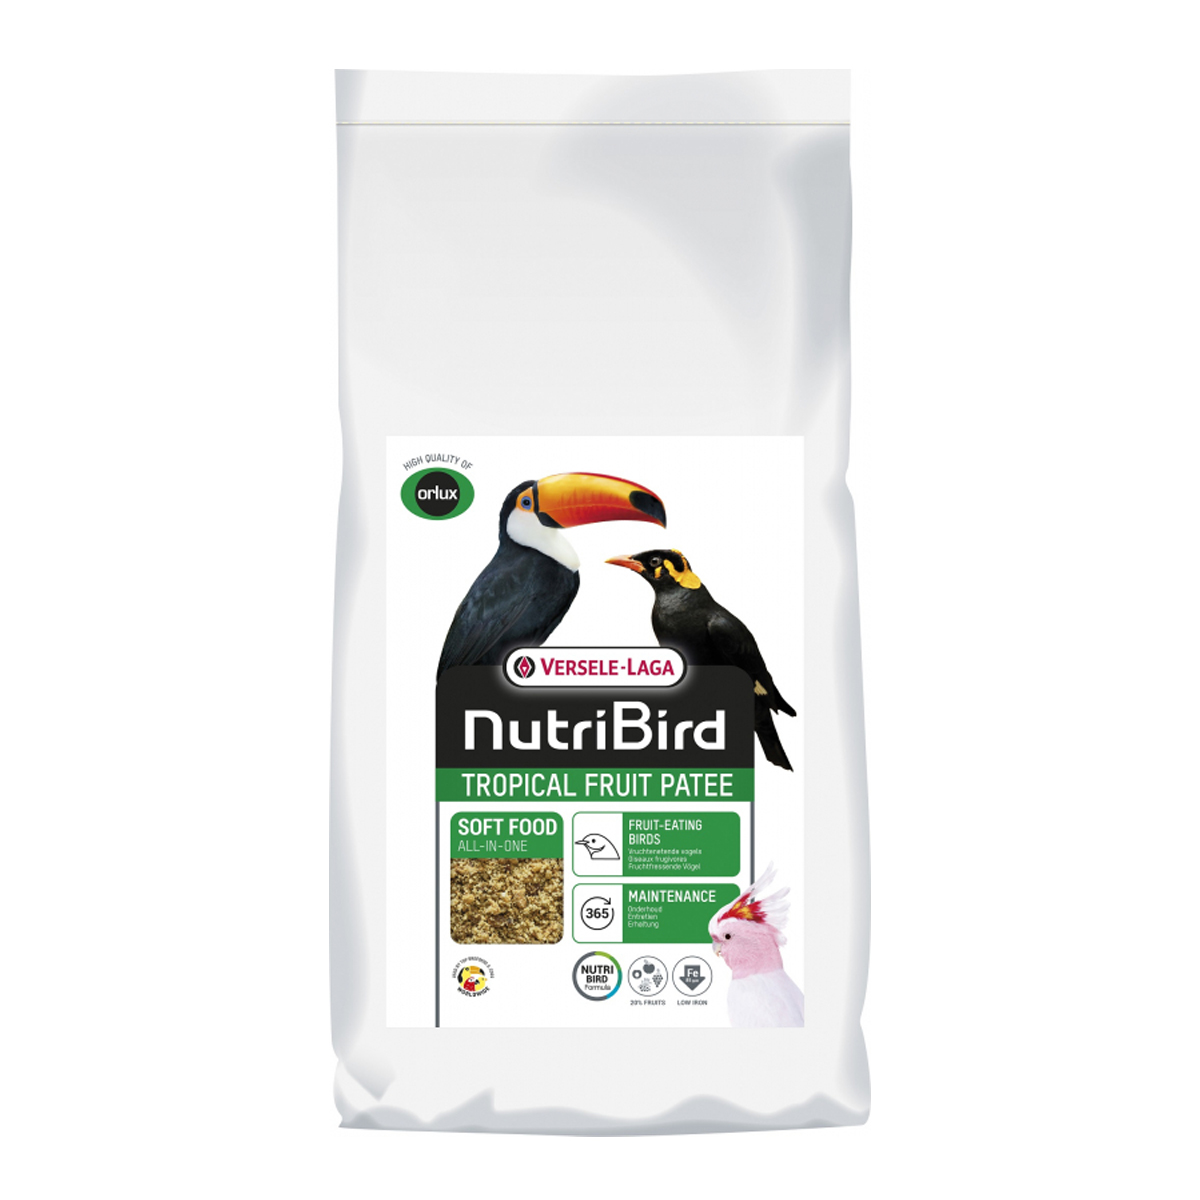 Orlux Tropical Fruit Patee Alimento Premium para pájaros frugívoros